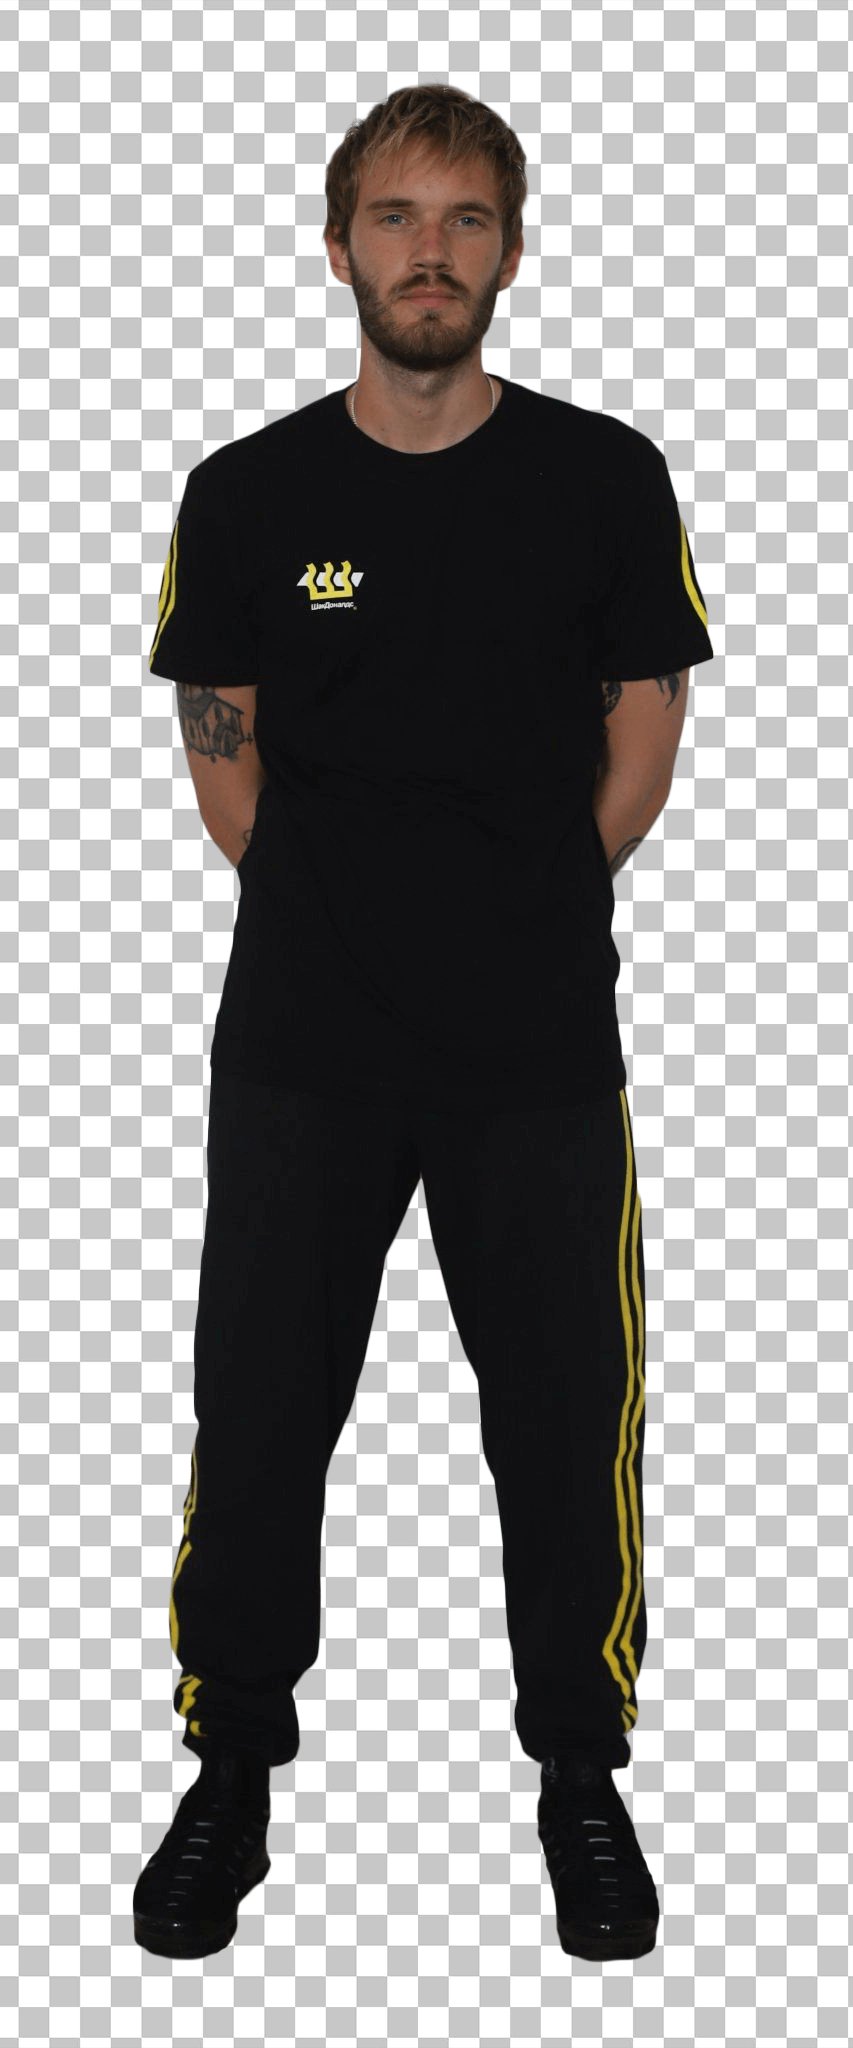 Pewdiepie standing wearing black t-shirt transparent image